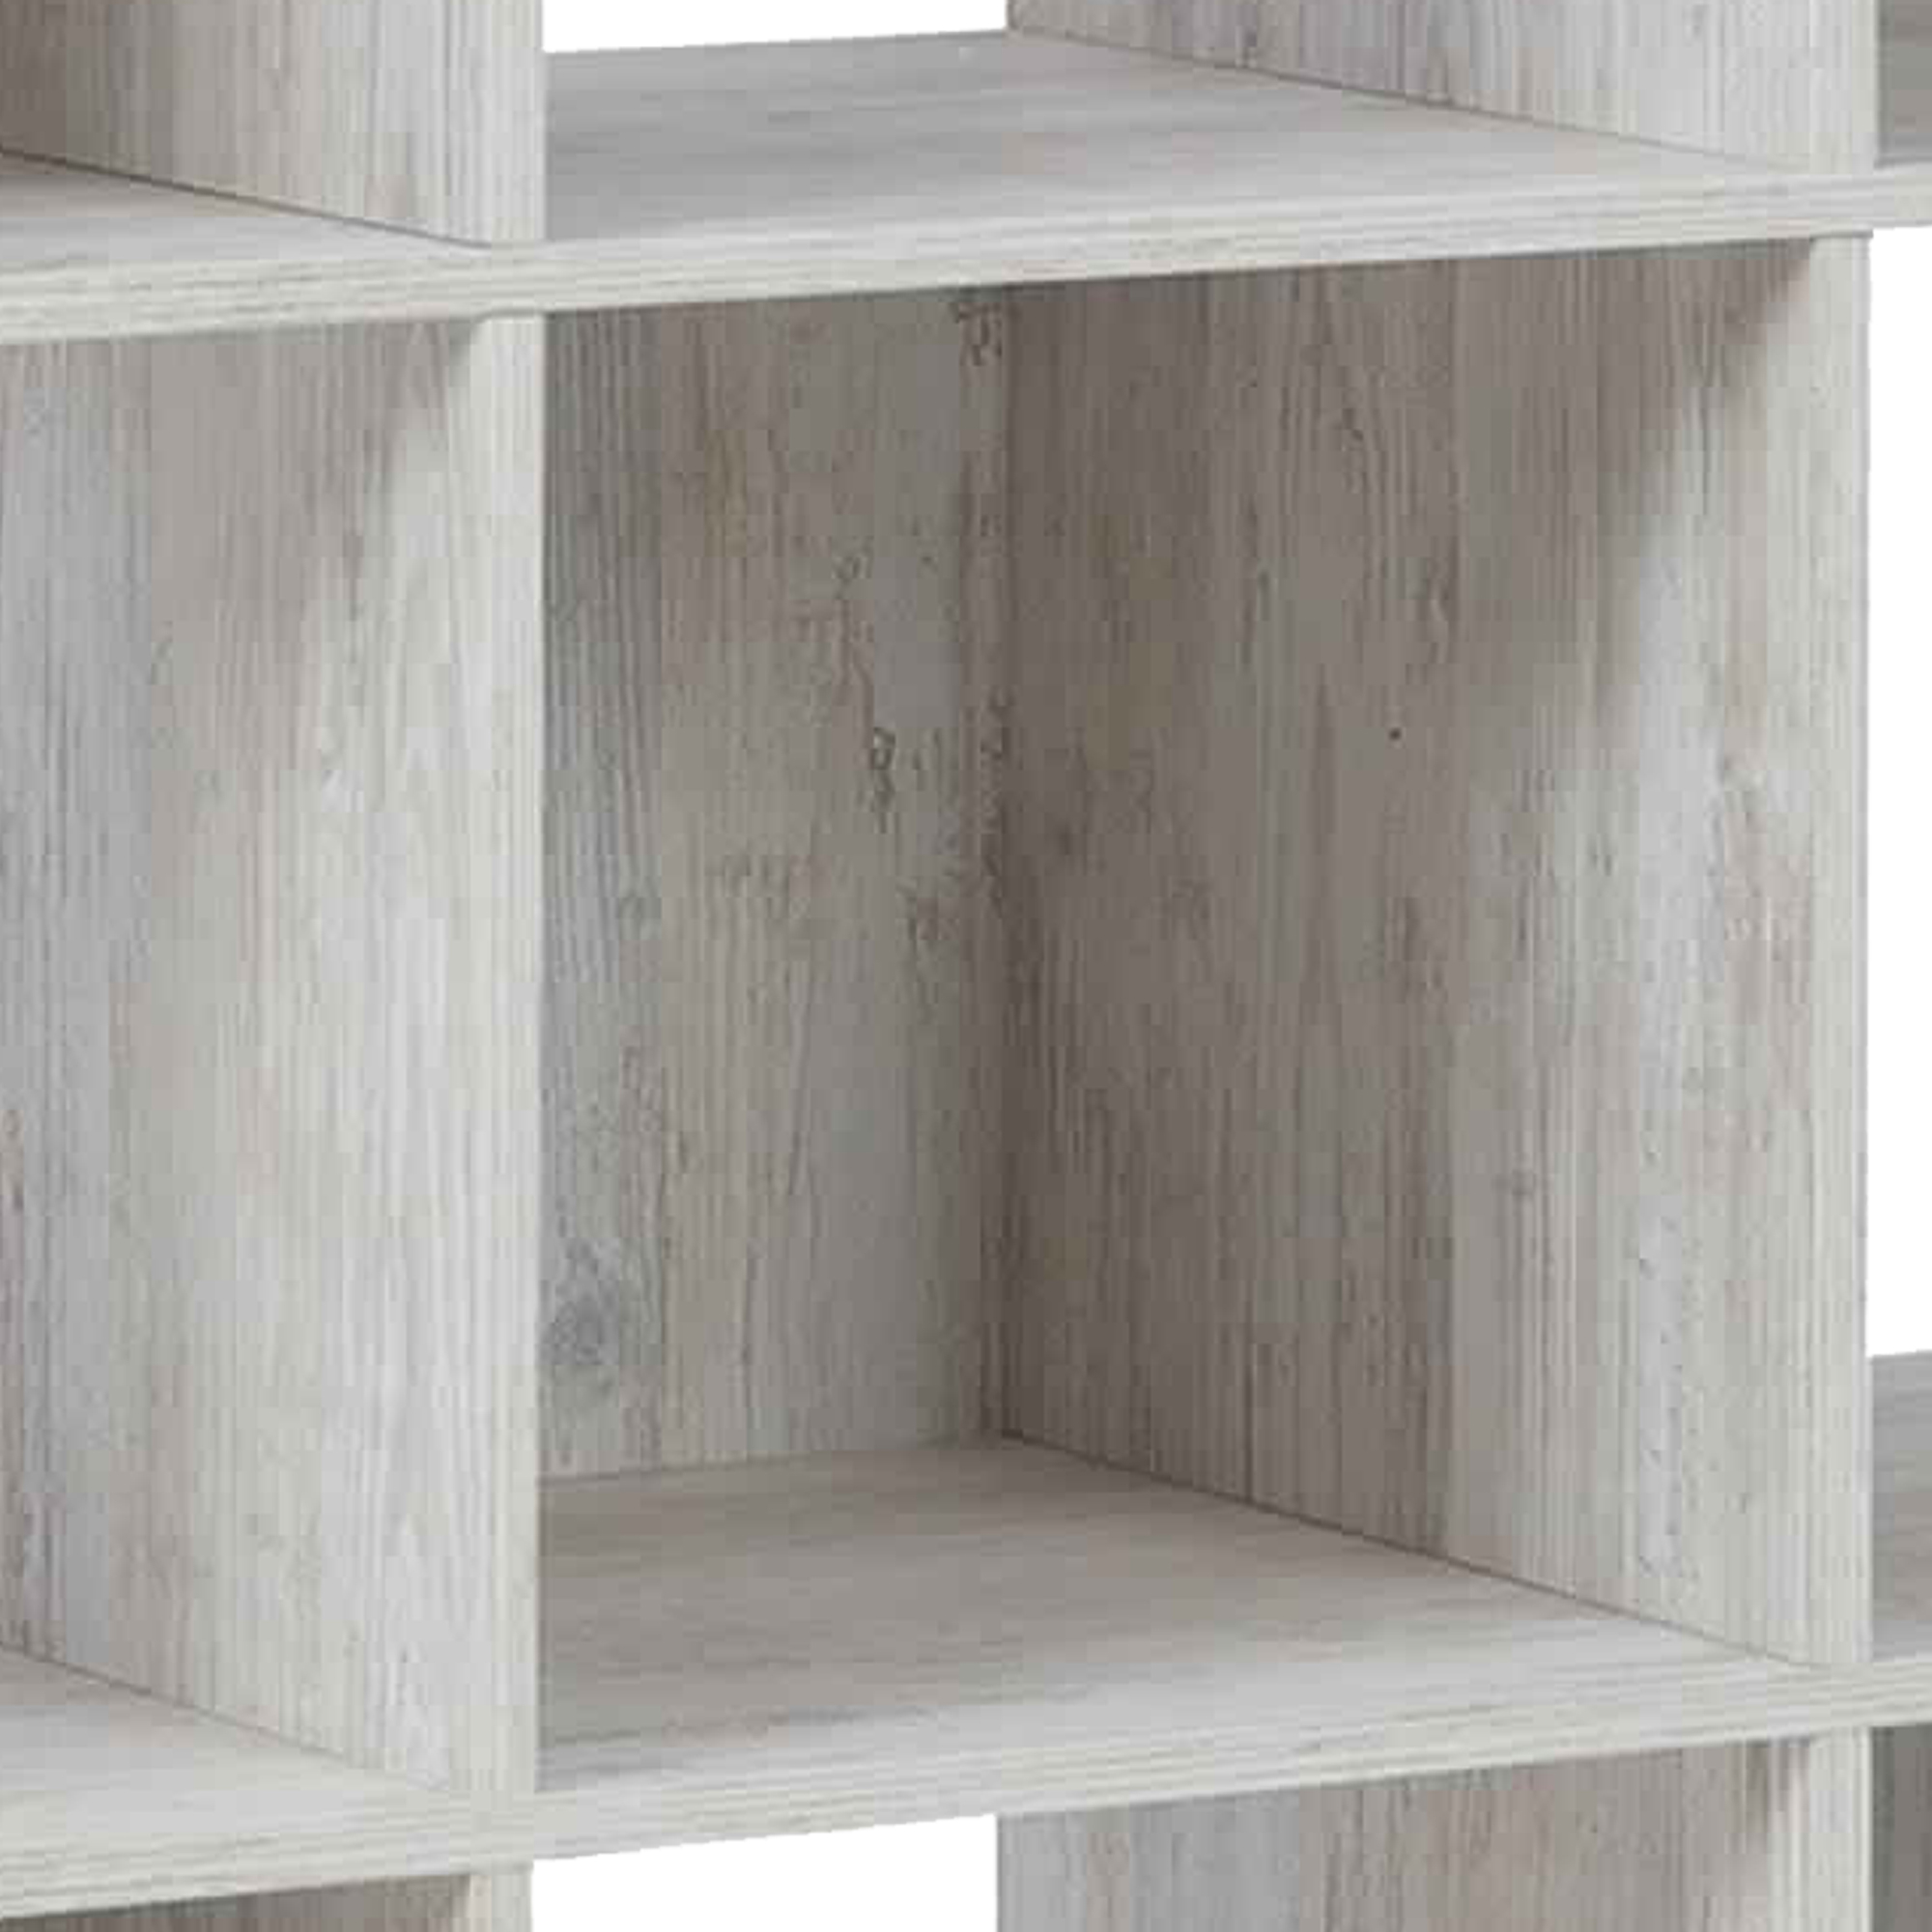 9 Cube Wooden Organizer With Grain Details, Washed White- Saltoro Sherpi